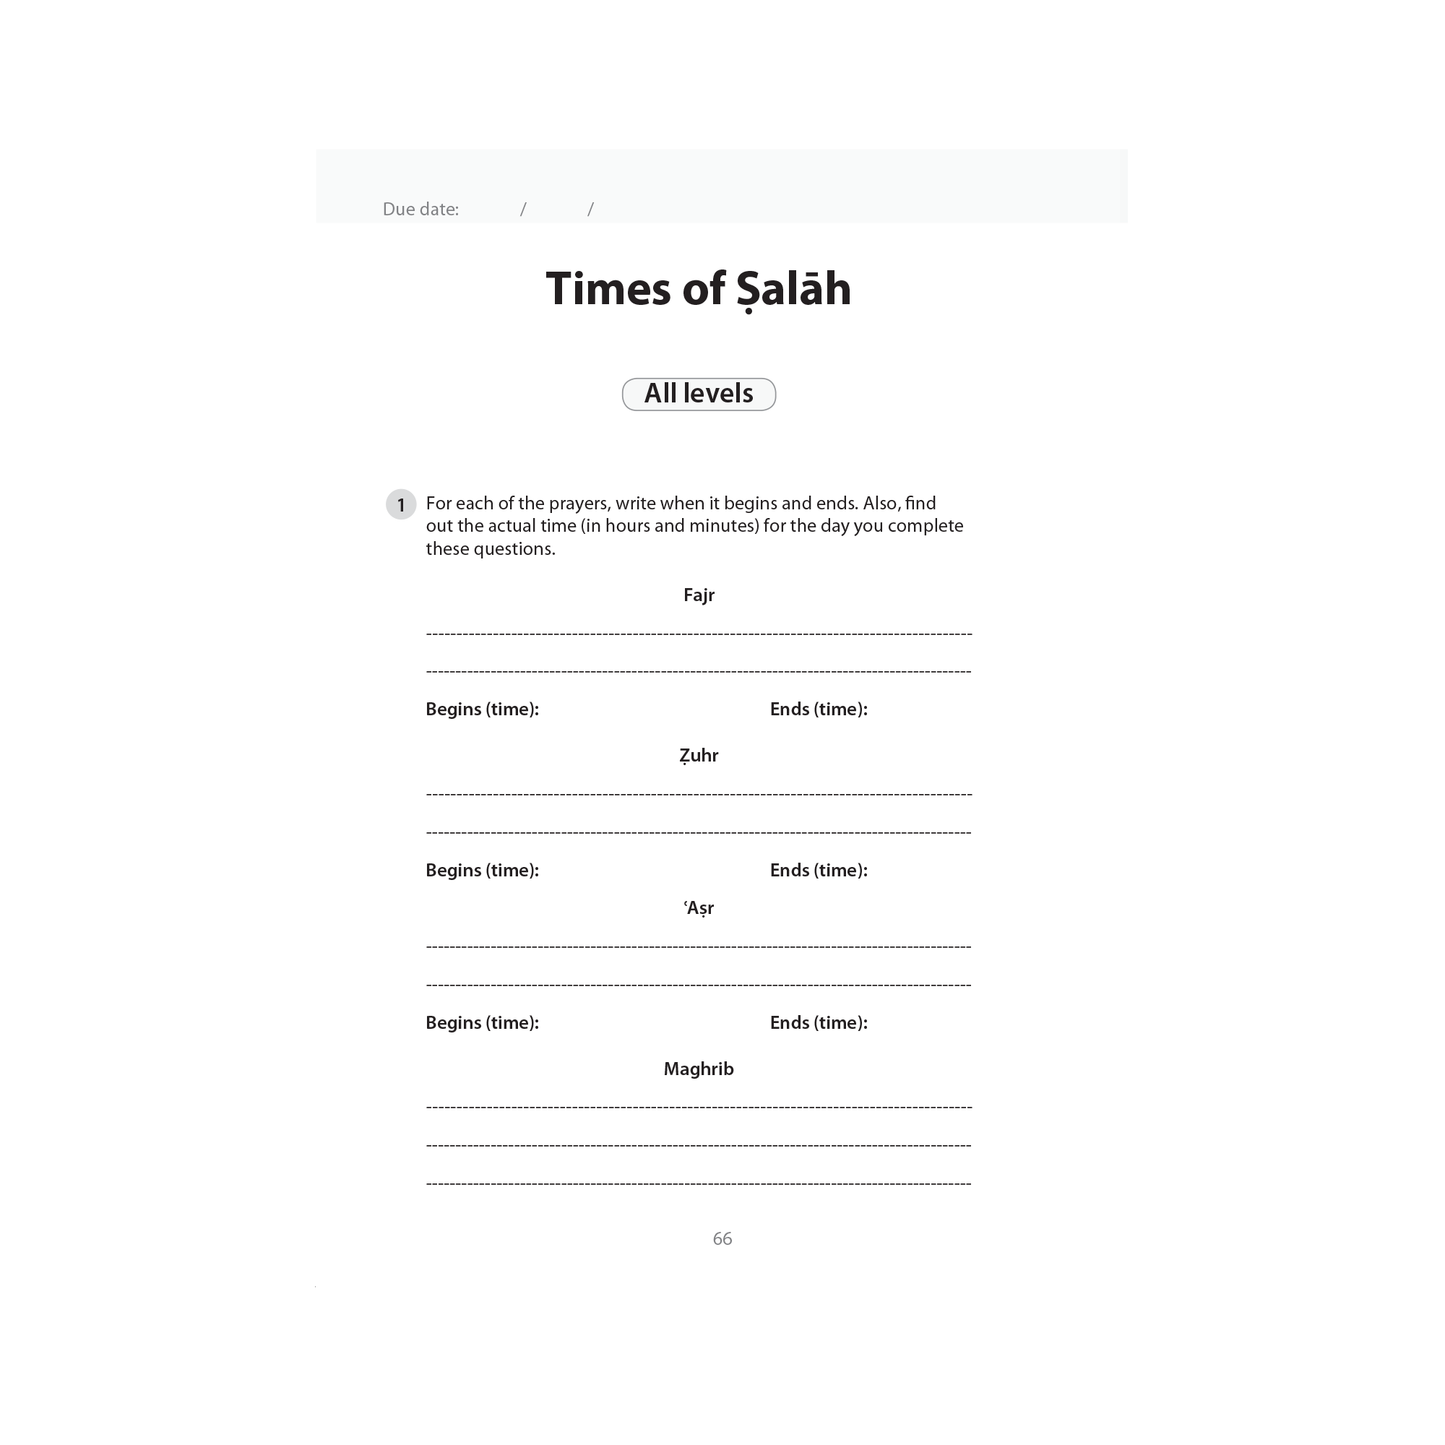 Islamic Studies: Workbook 5 – Learn about Islam Series by Safar